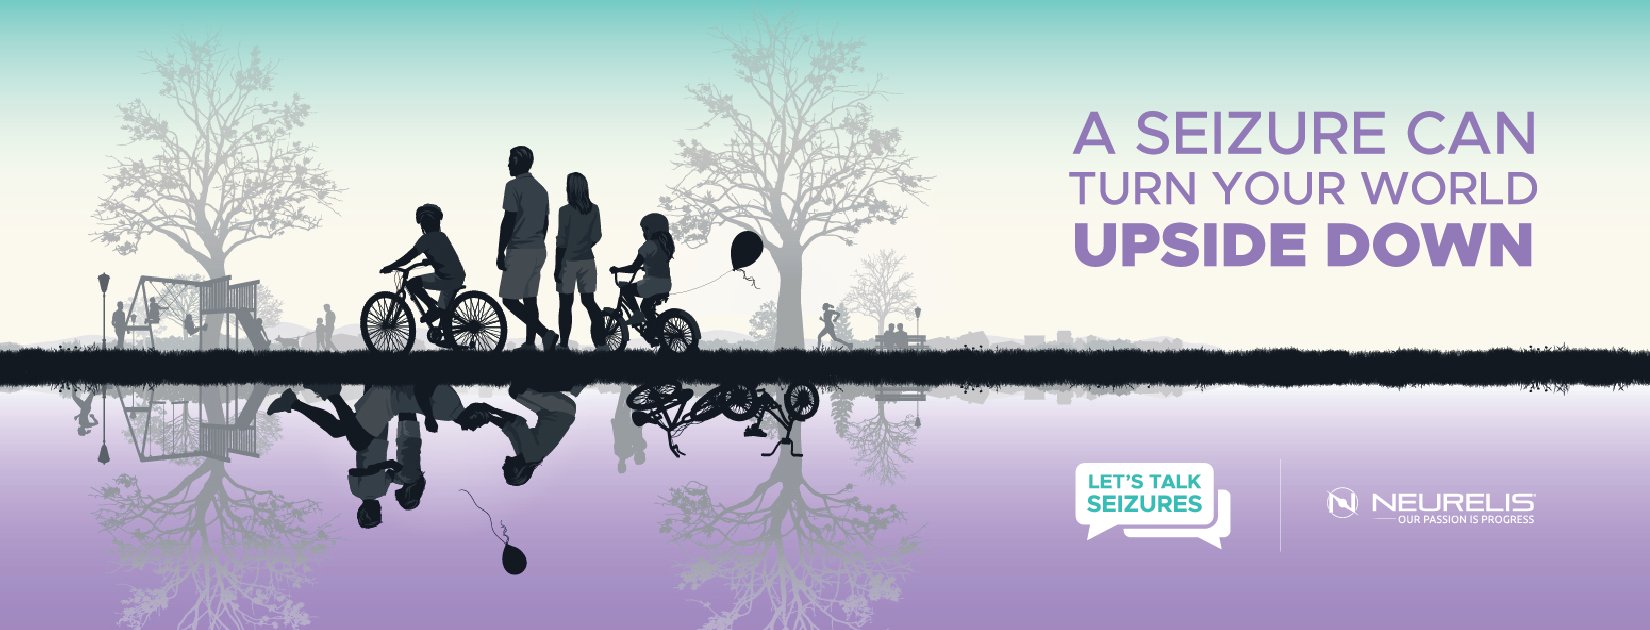 Neurelis seizure awareness campaign banner ad